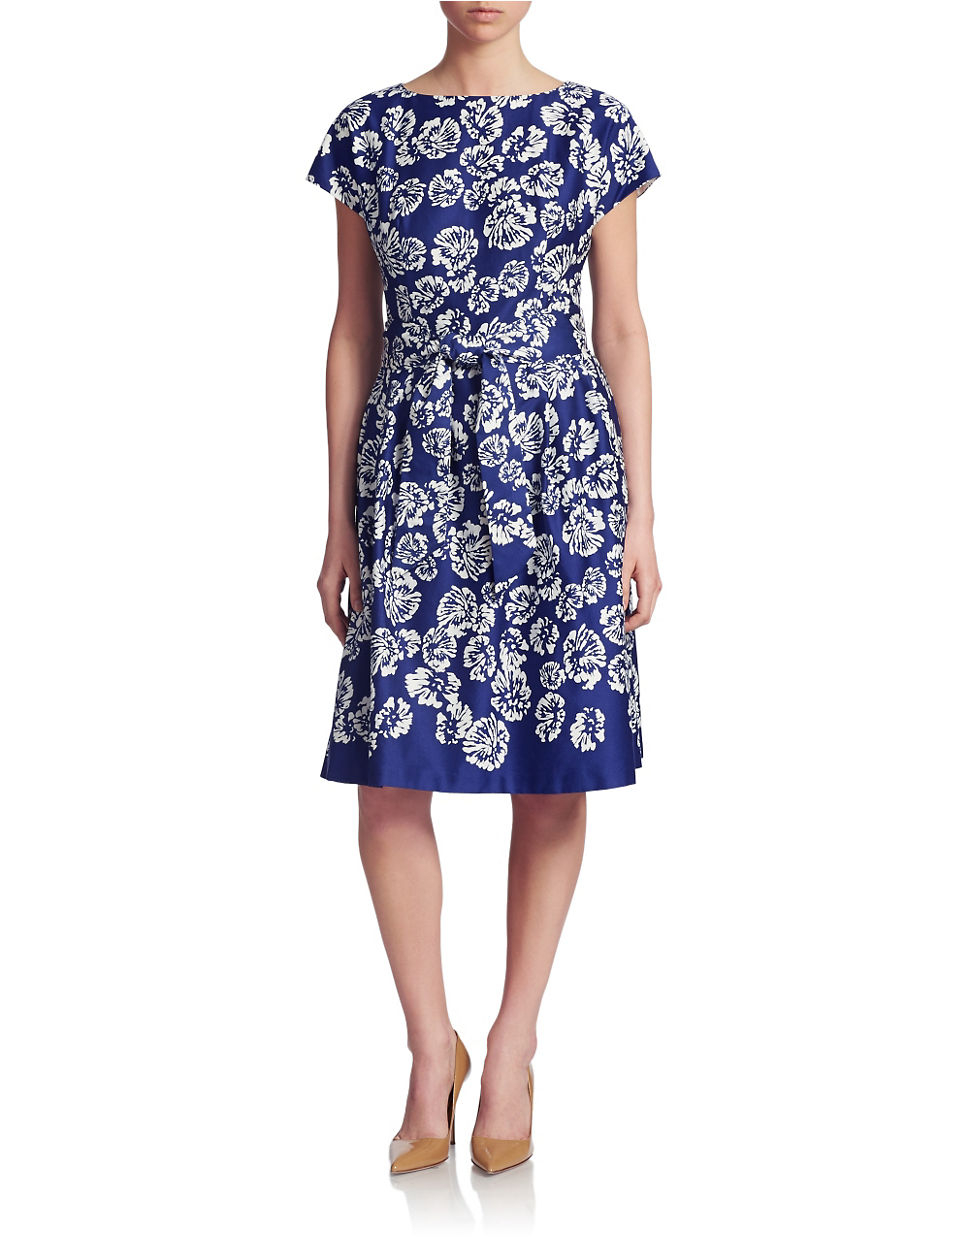 Anne klein Floral Print Belted Dress in Blue | Lyst